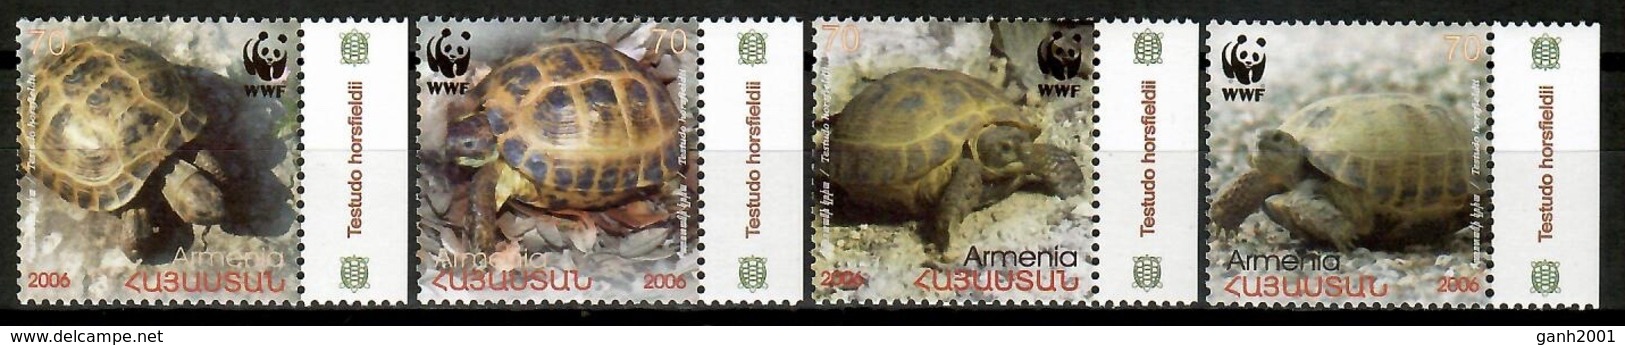 Armenia 2006 / Reptiles Turtles WWF MNH Tortugas Schildkröten / Cu13928  5-25 - Turtles